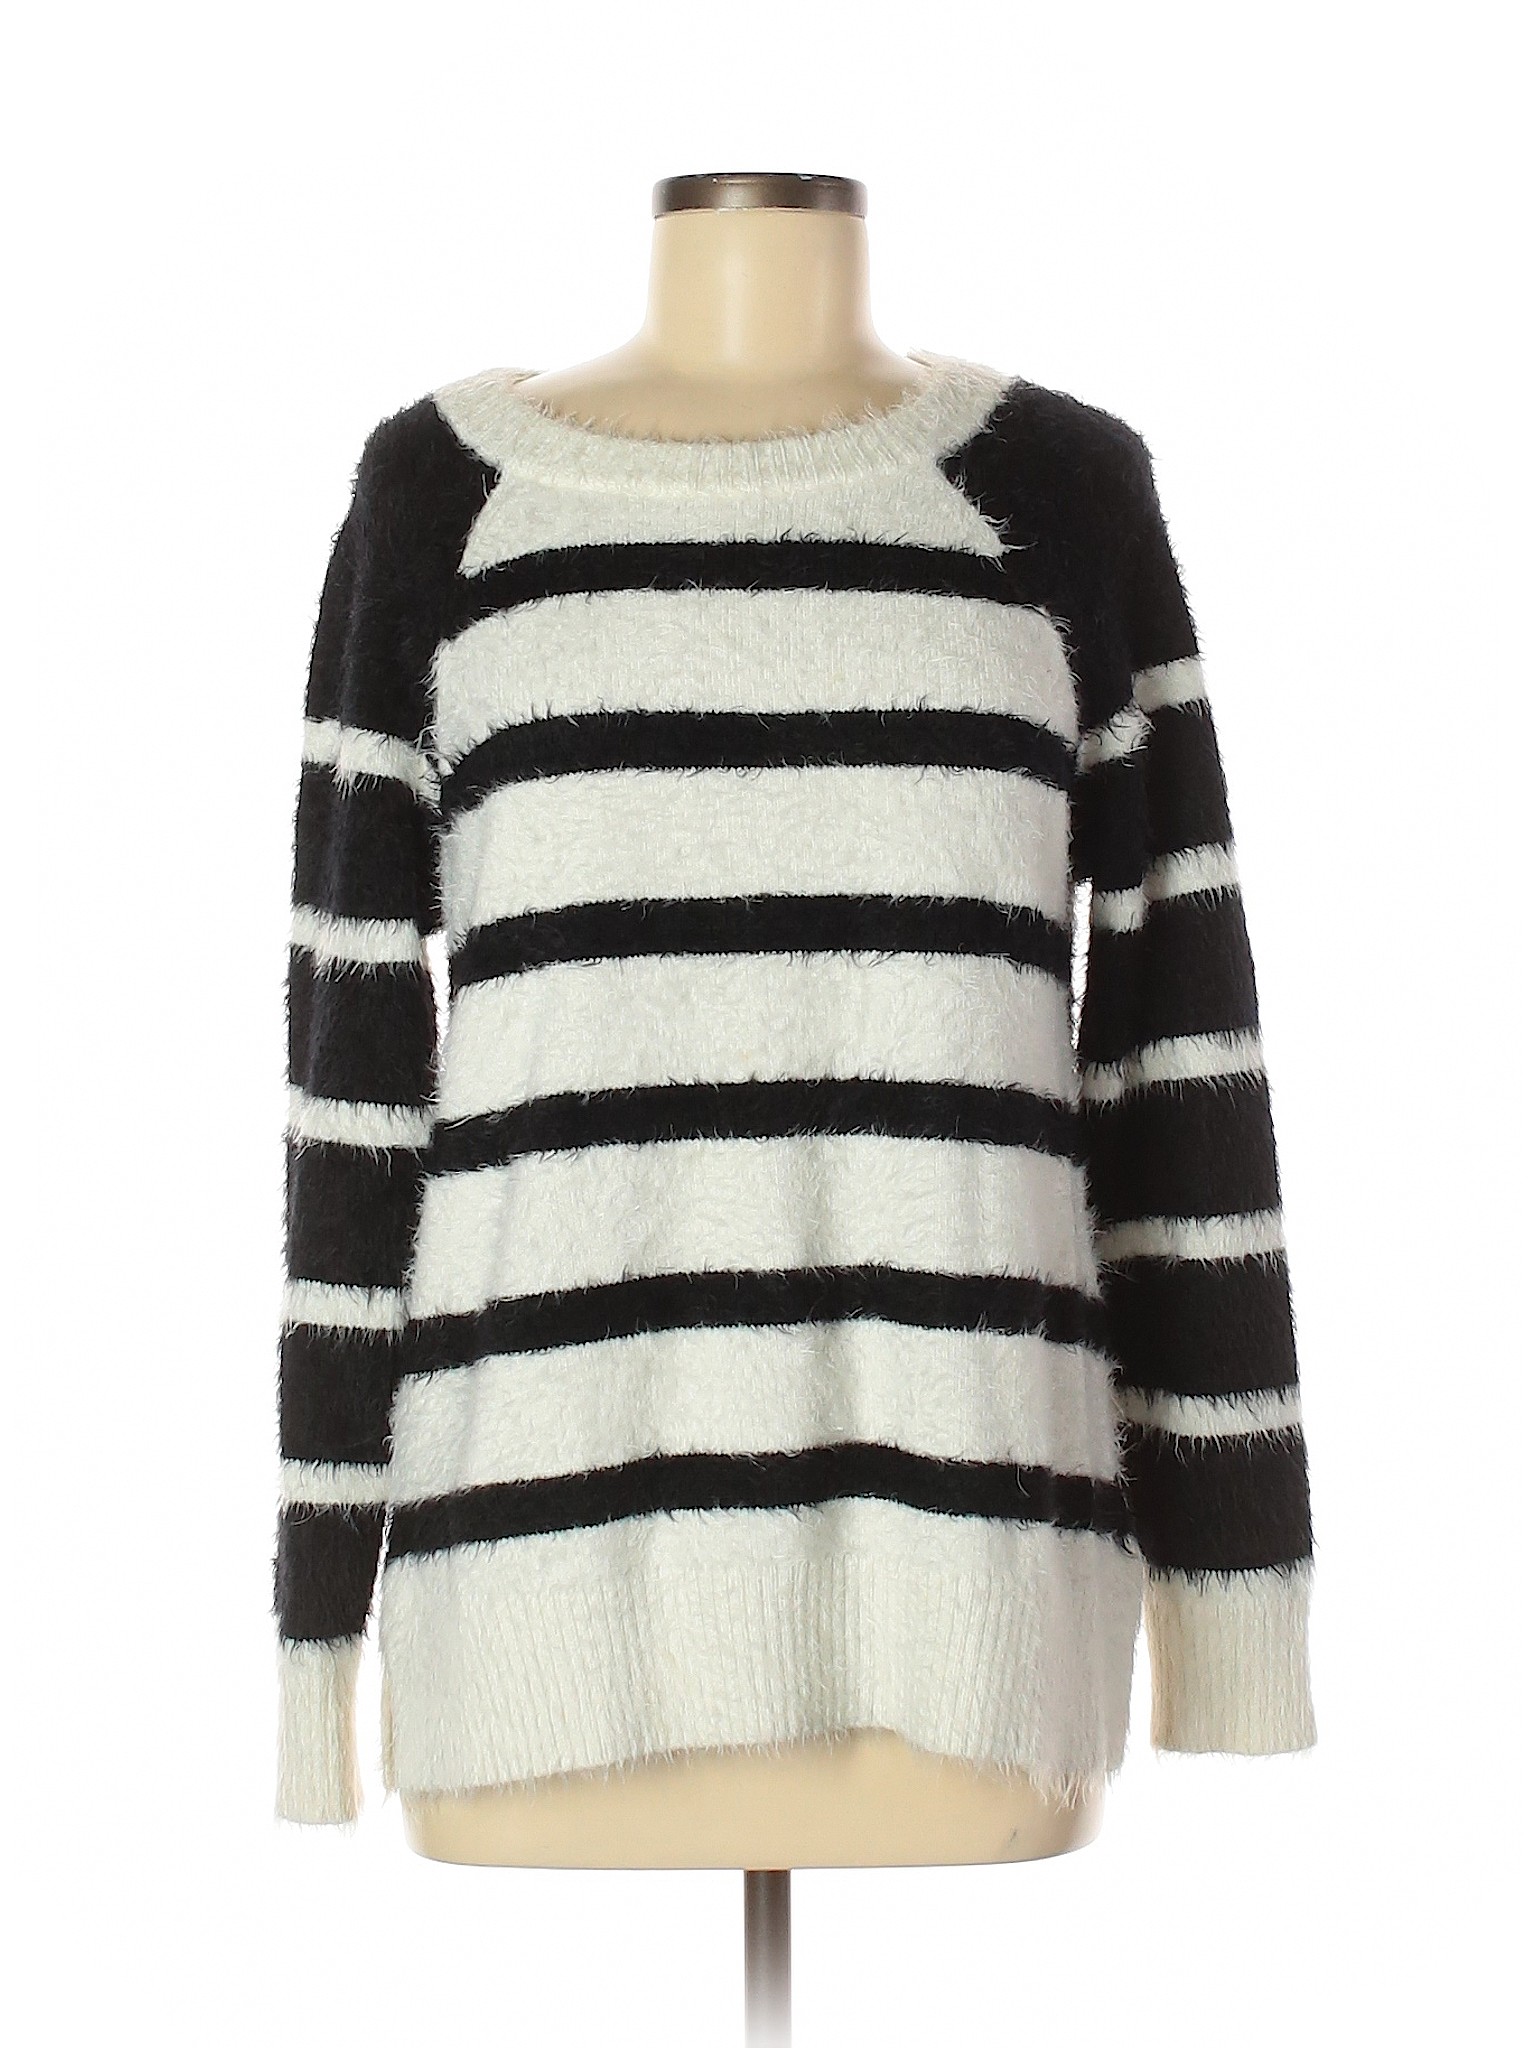 Ann Taylor LOFT Women Ivory Pullover Sweater M | eBay